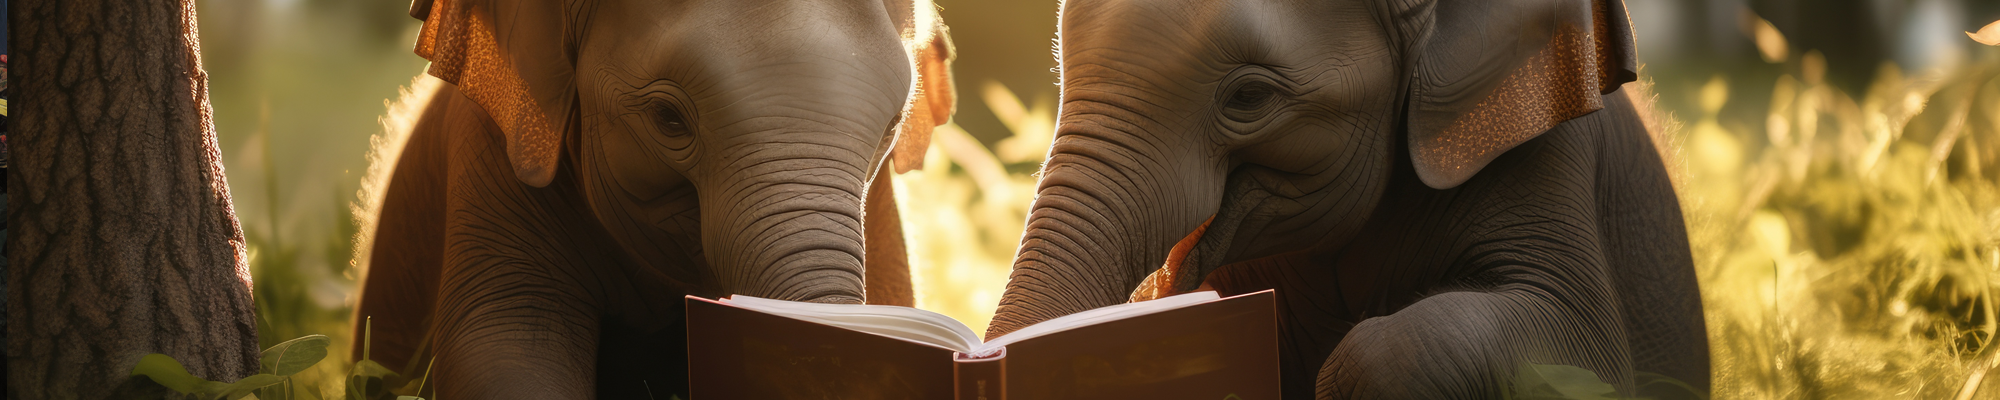 two elephants reading under a tree